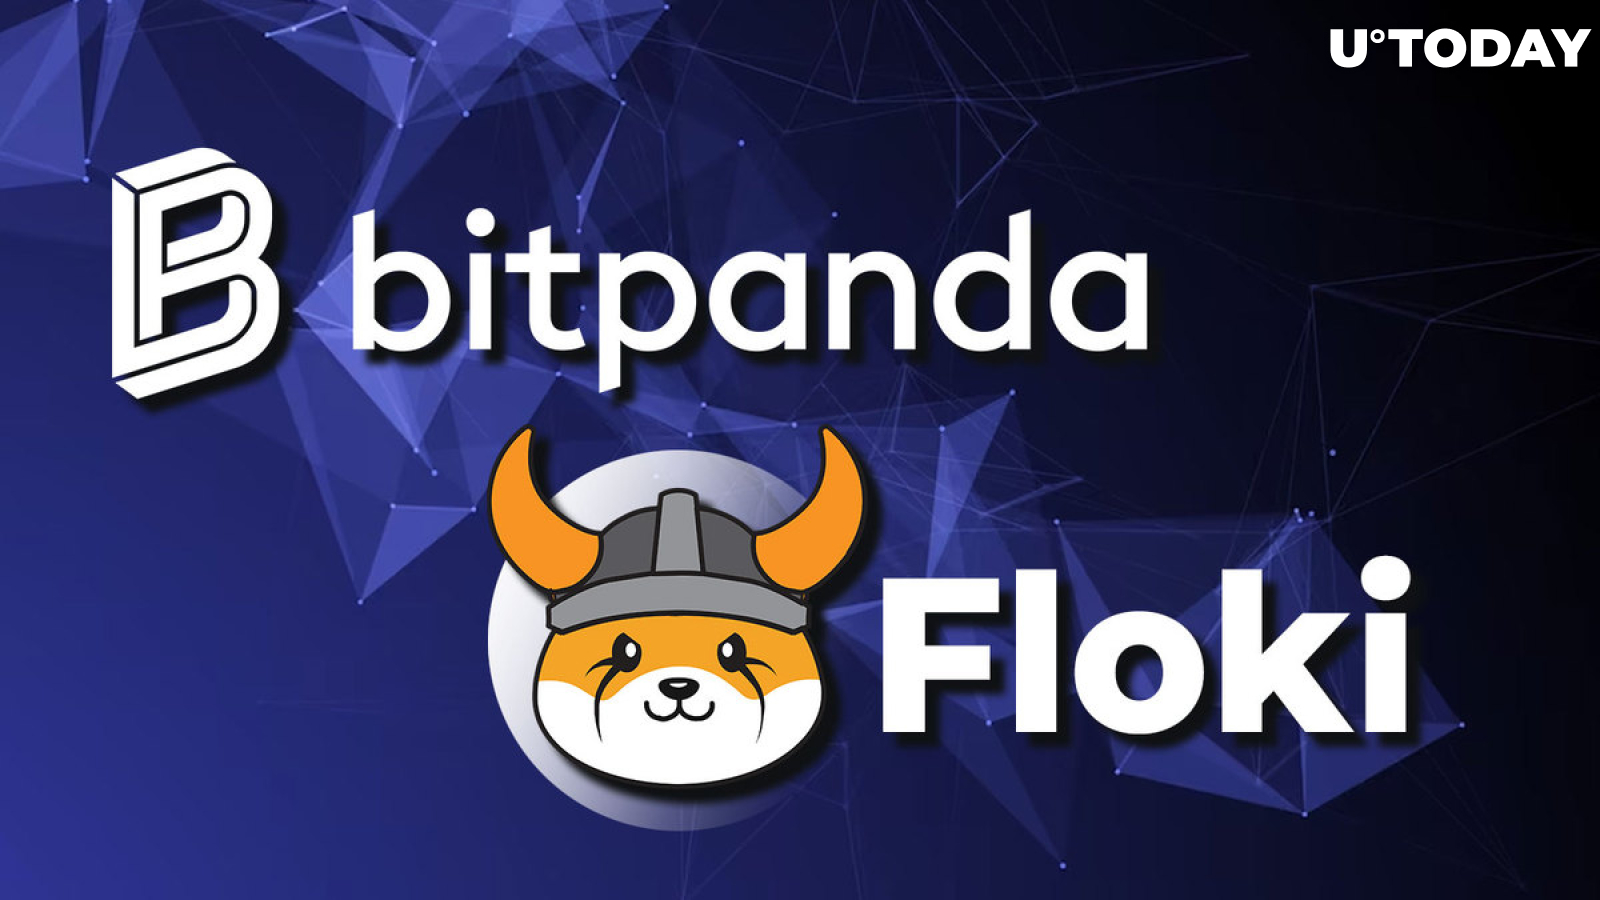 FLOKI/EUR Pair to Launch on Bitpanda in 2 Days: Details 